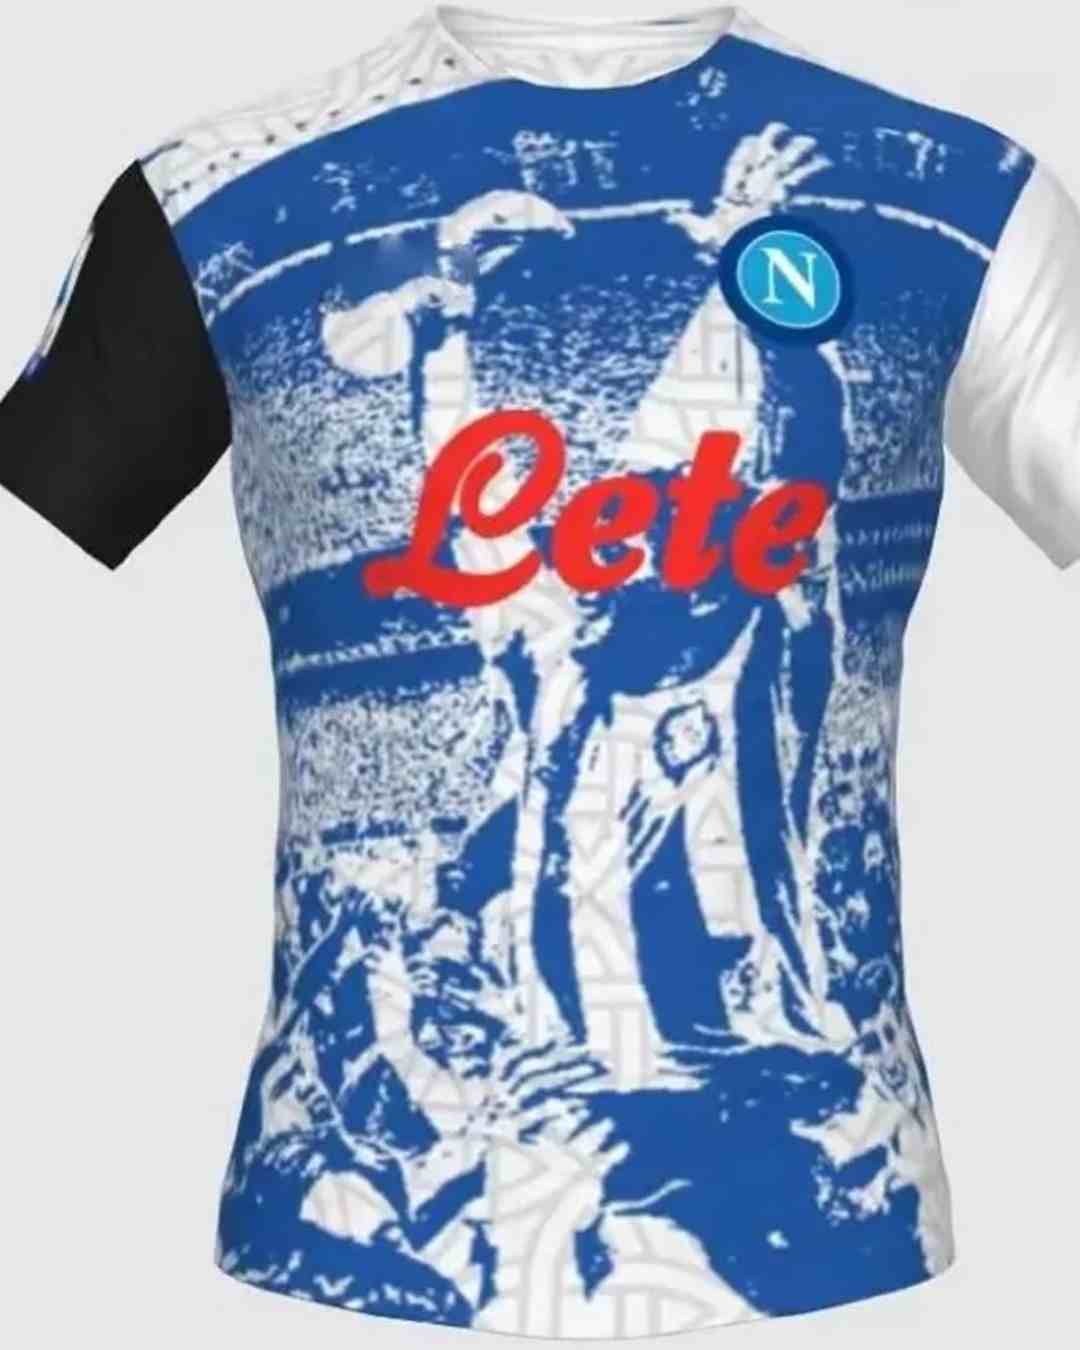 Napoli fake football shirt